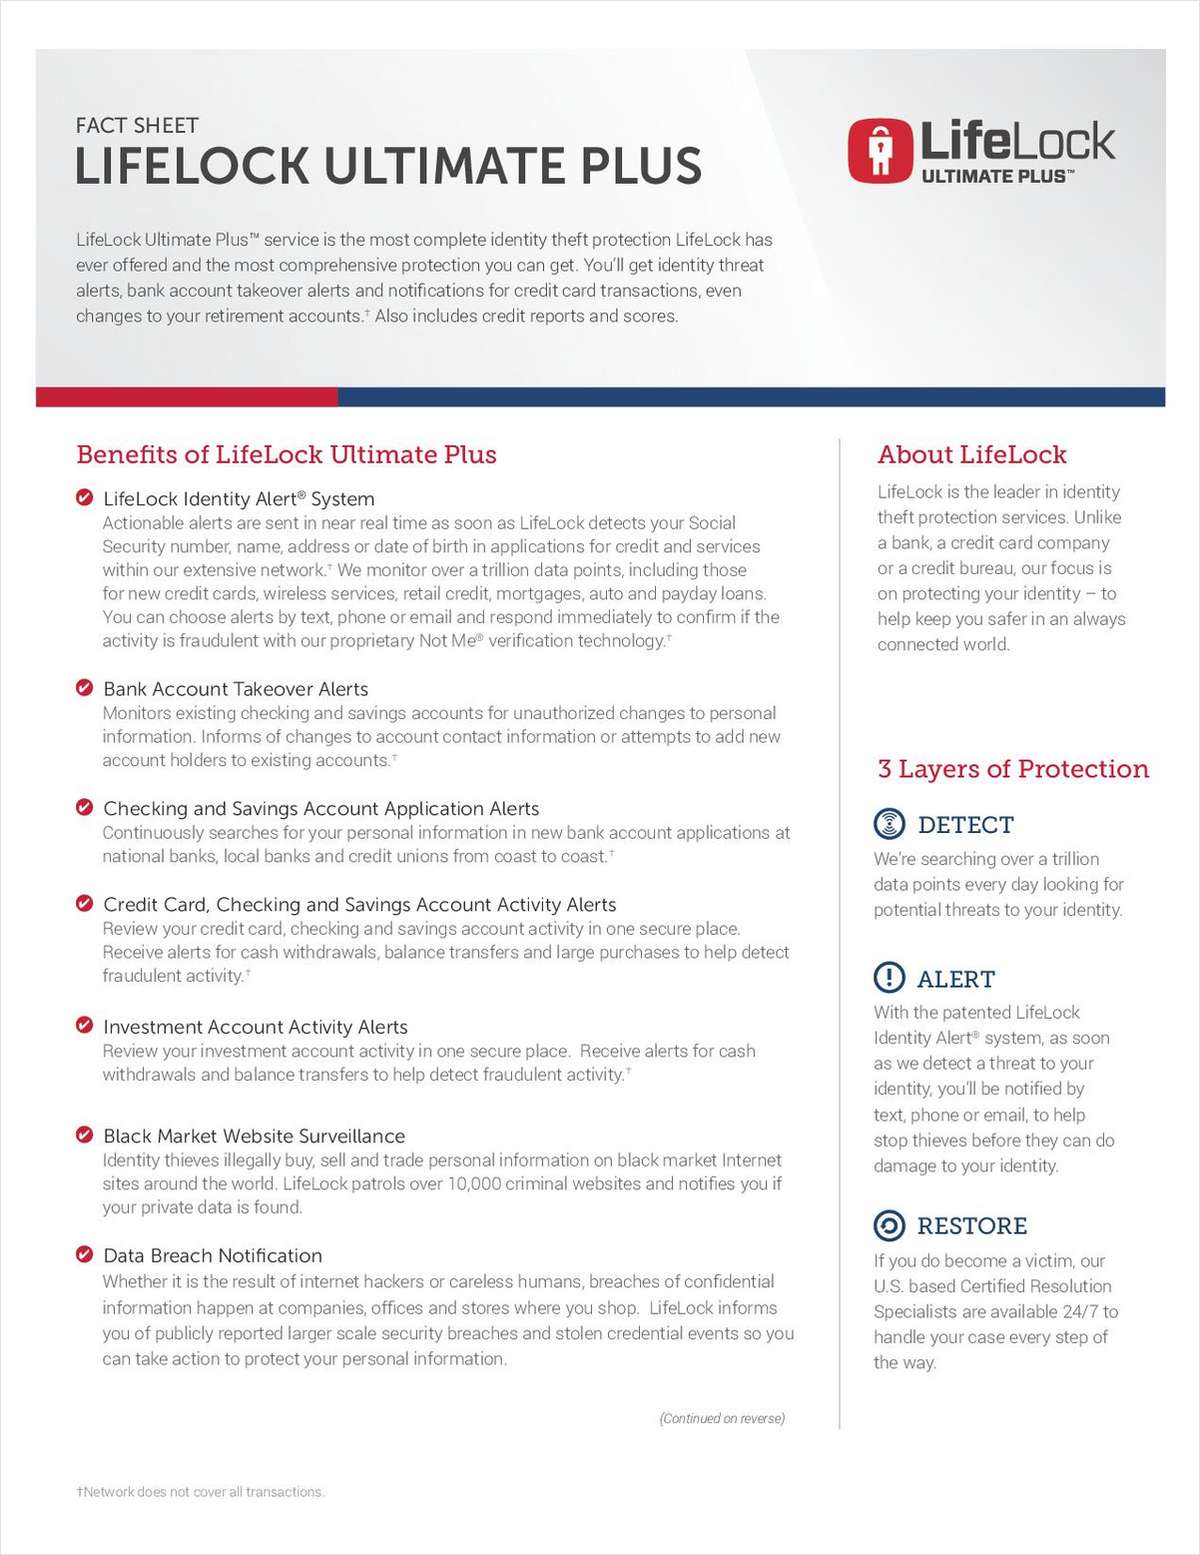 LifeLock Protection Levels Fact Sheet